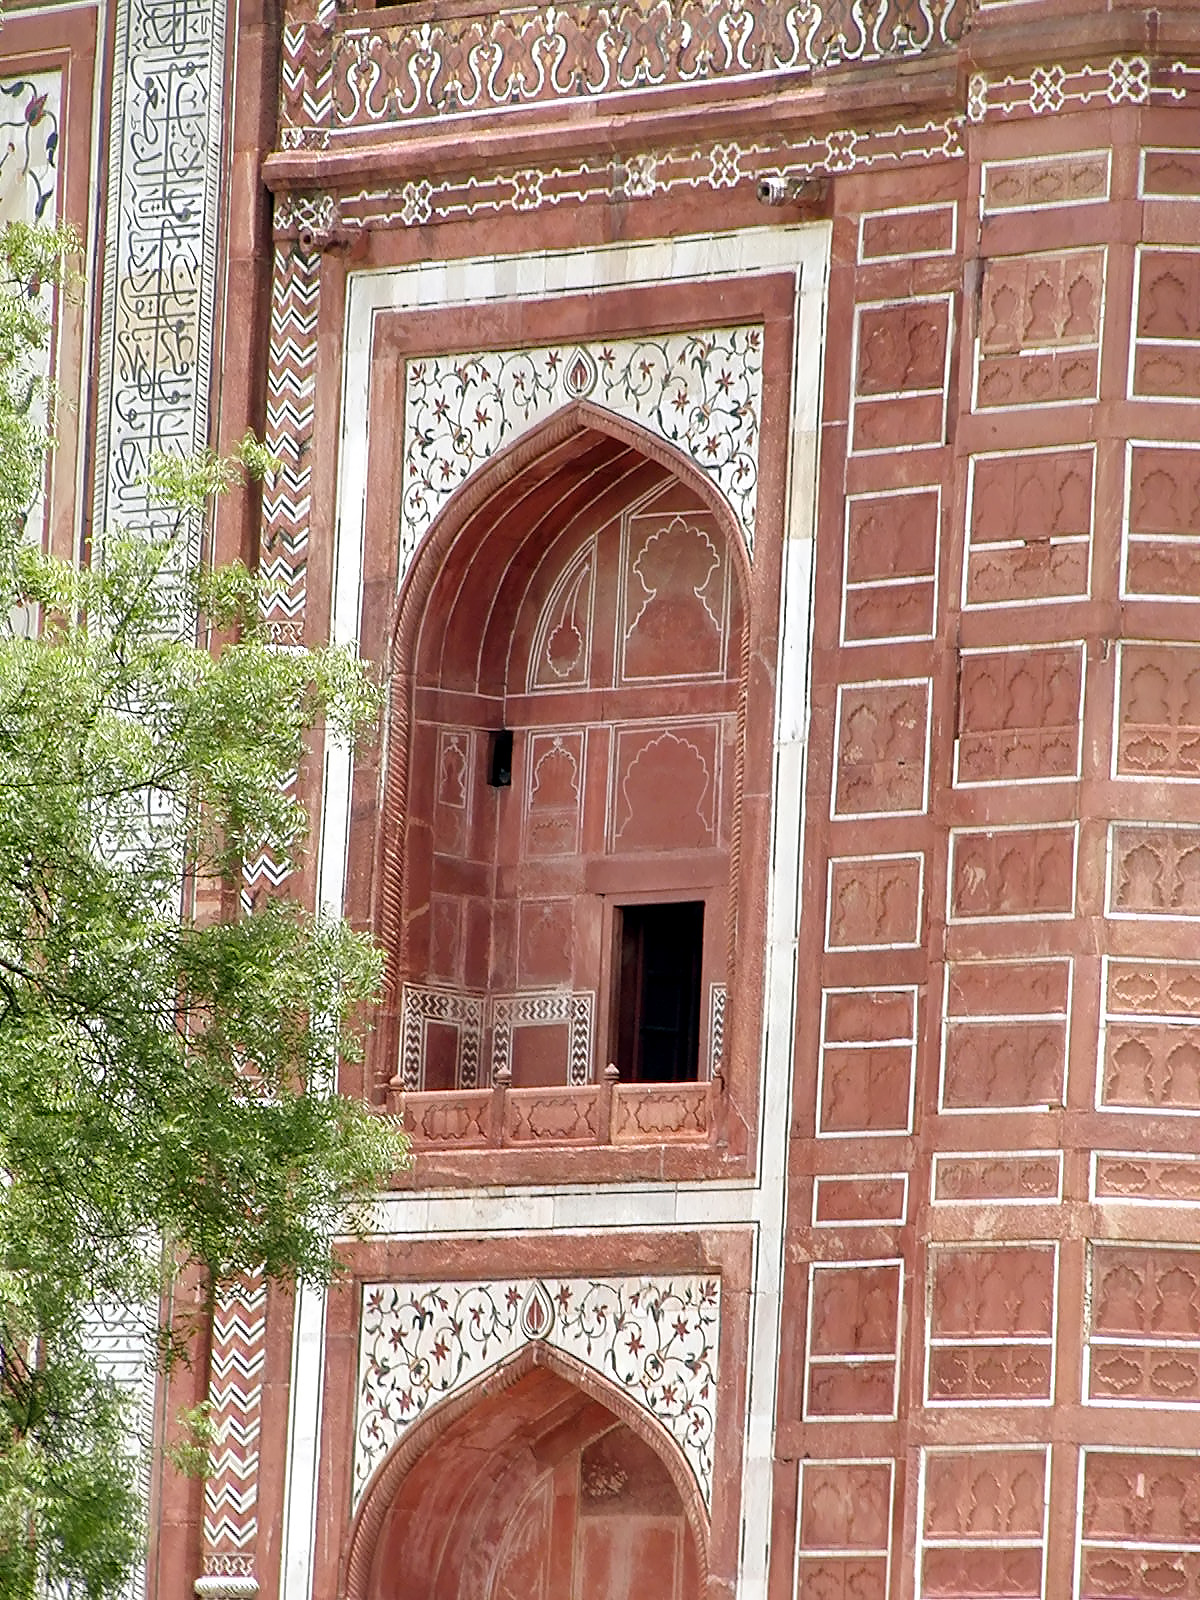 10-Jun-2001 11:57 - Agra - The Taj Mahal - Main gateway - detail